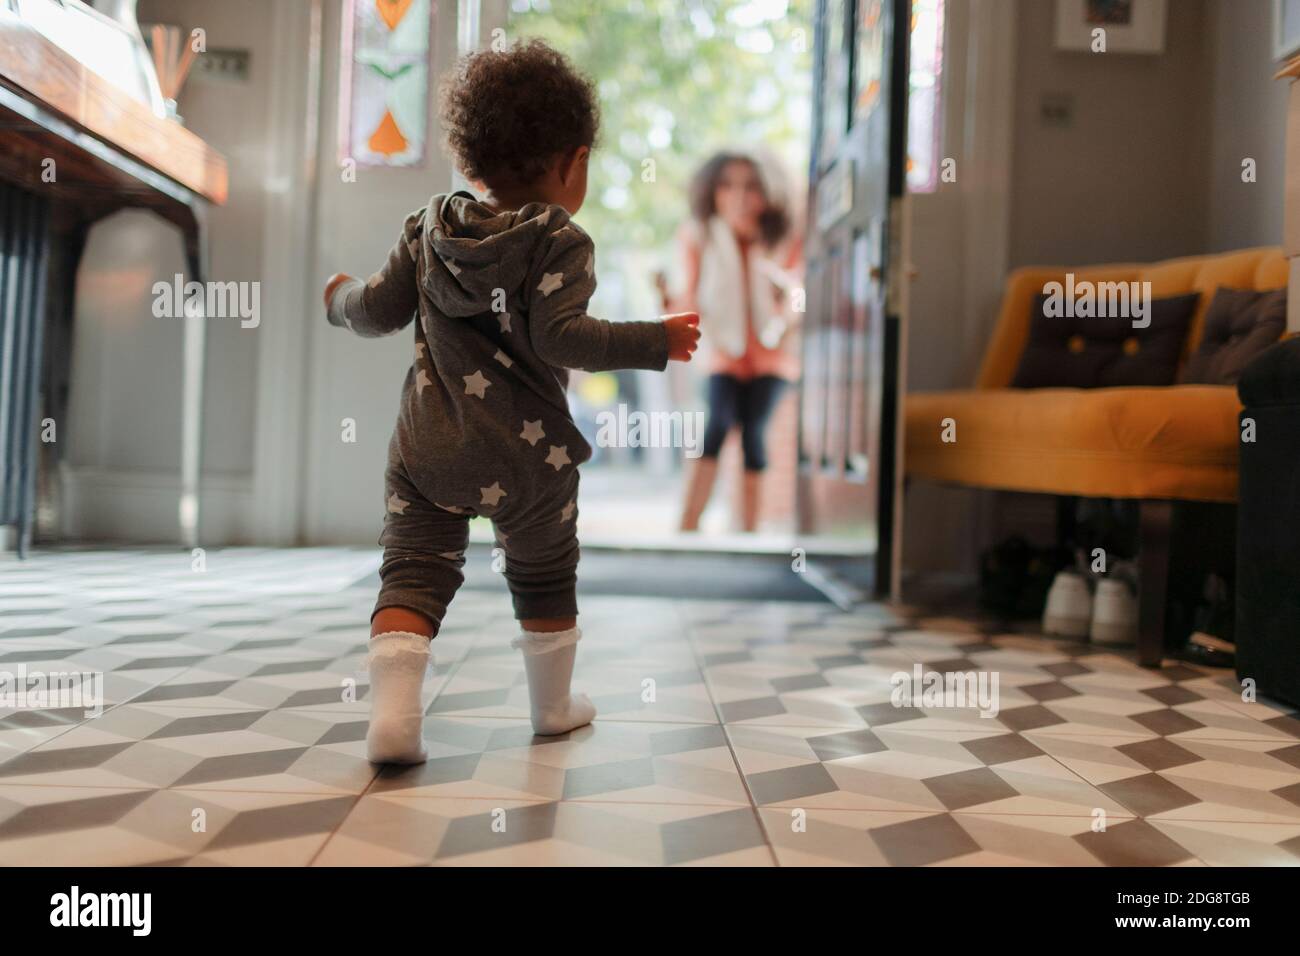 Cute baby girl in star pajamas walking to mother at open doorway Stock Photo